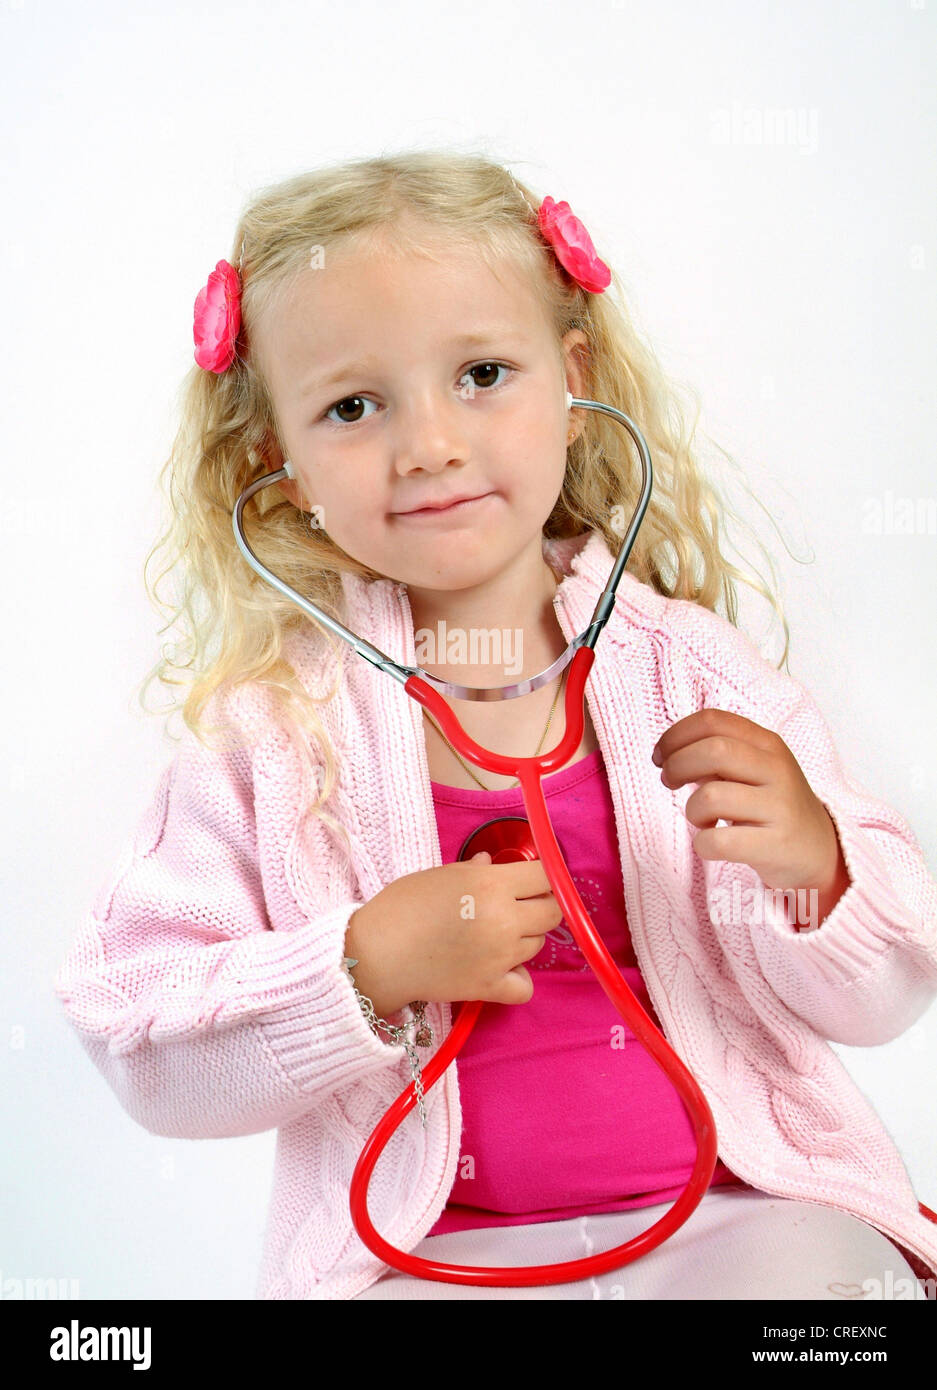 girl with stethoscope Stock Photo